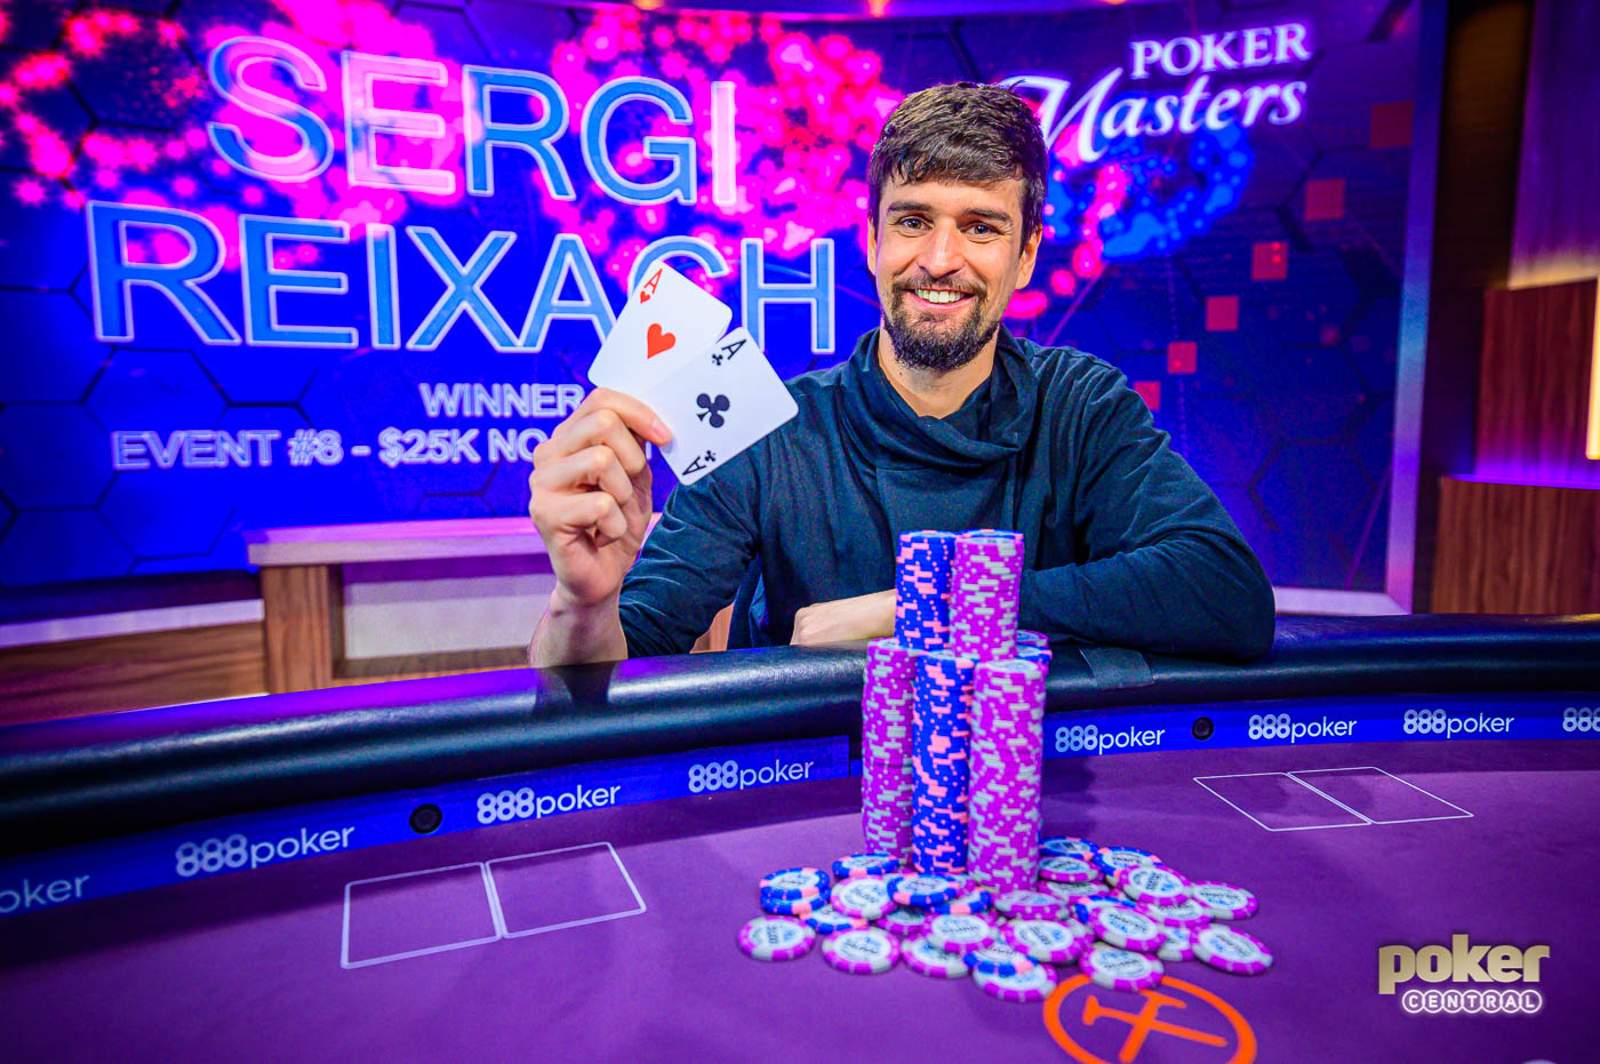 Sergi Reixach Wins Poker Masters Event #8 for $369,000